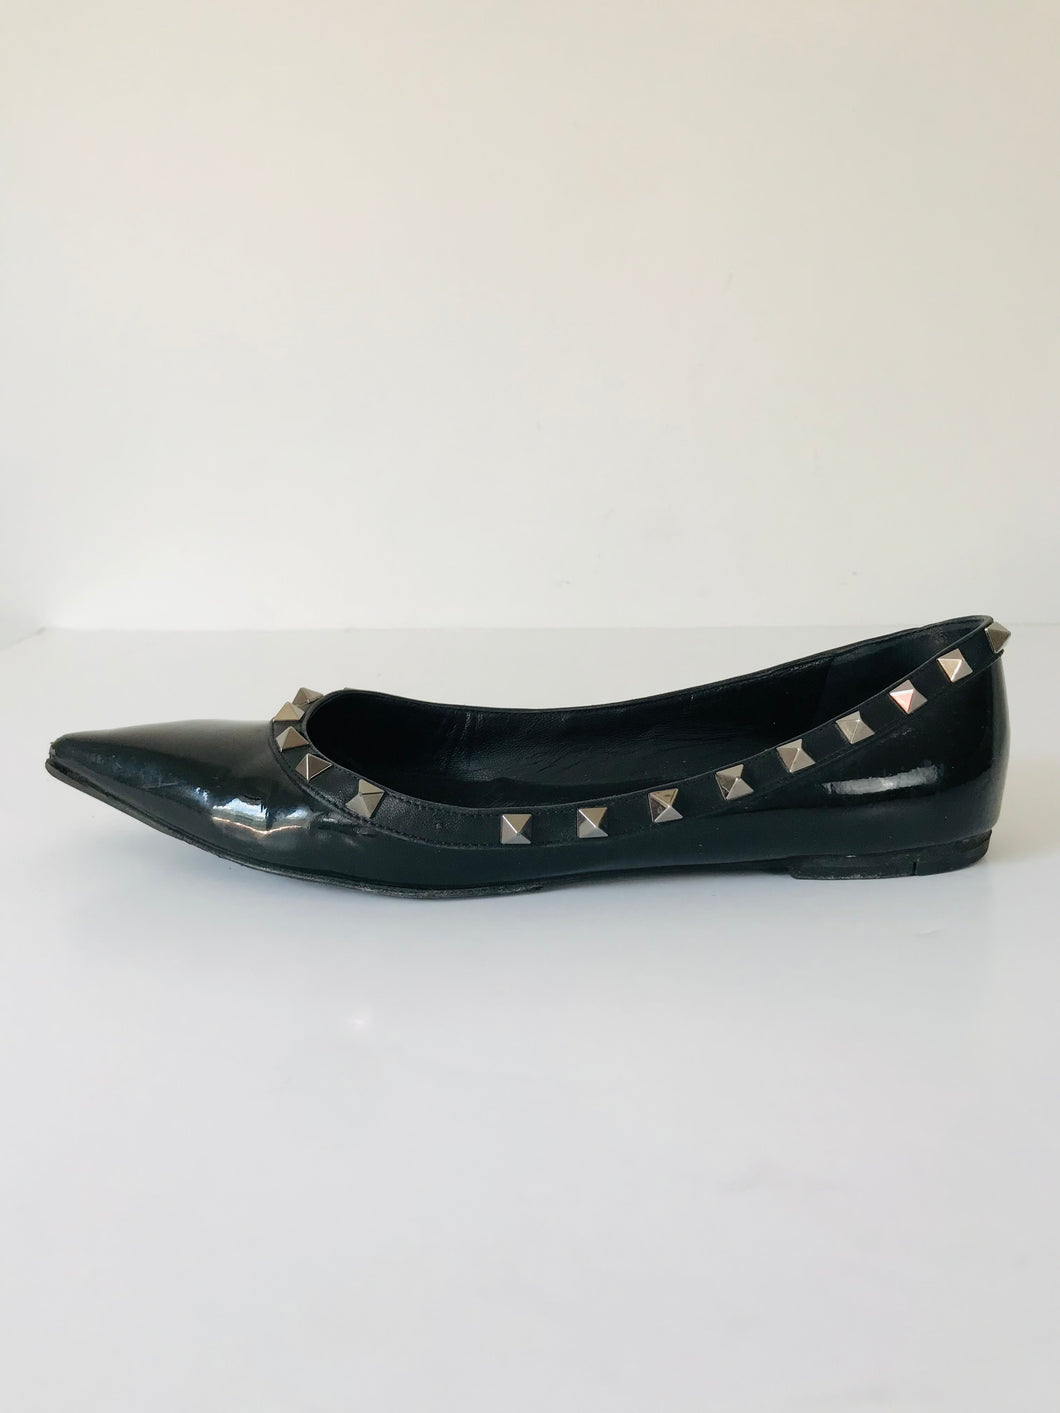 Valentino Women's Studded Patent Slip-On Flat Shoes | 39 UK6 | Black